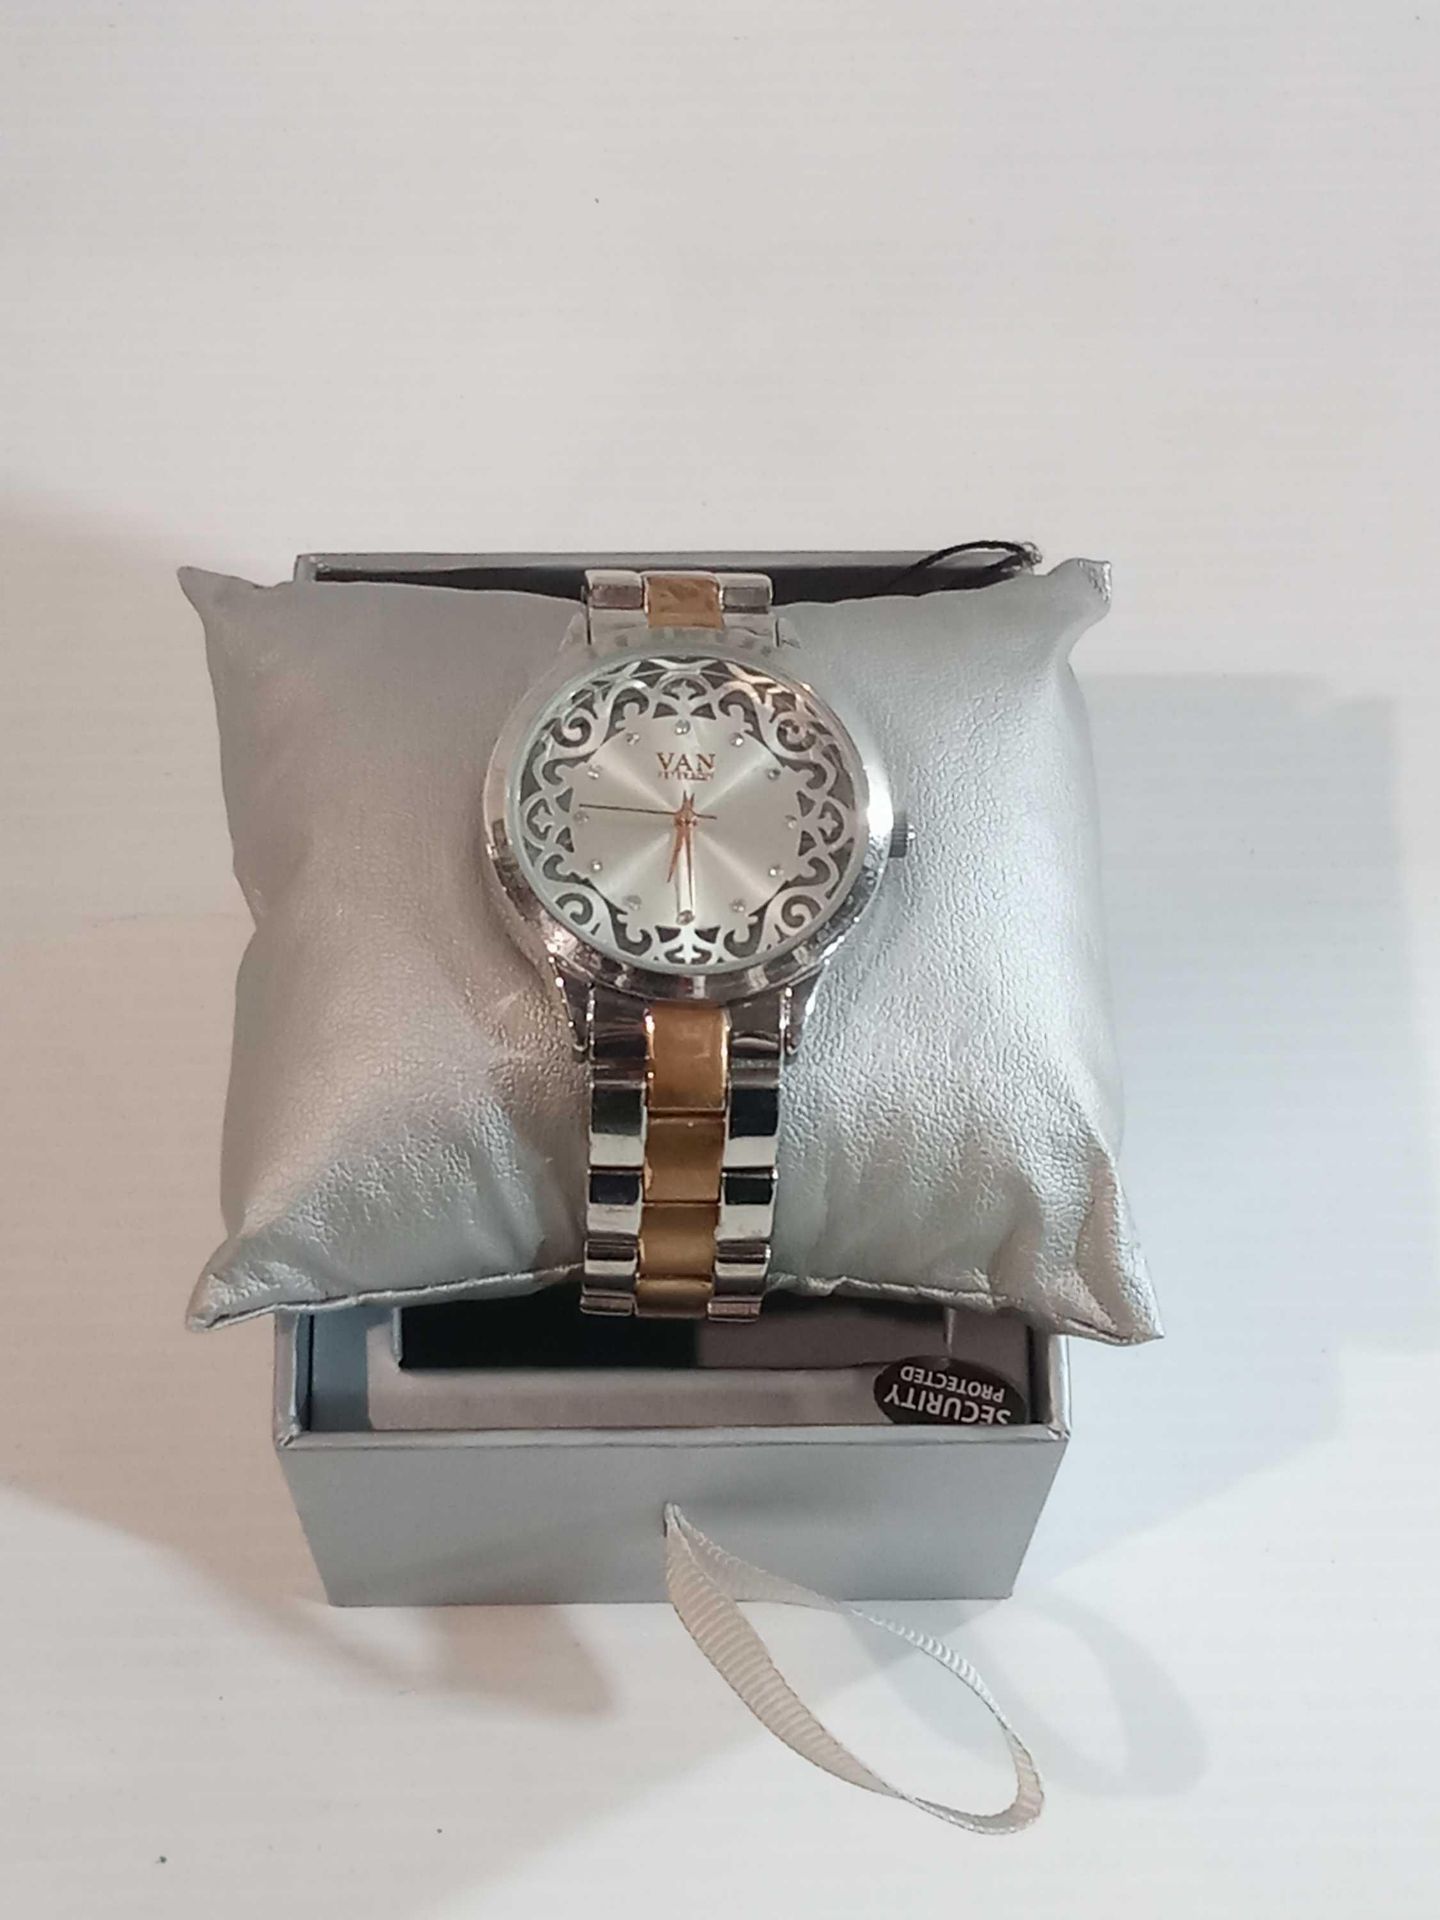 RRP £100 Boxed Van Peterson Stainless Steel Wrist Watch - Image 2 of 2